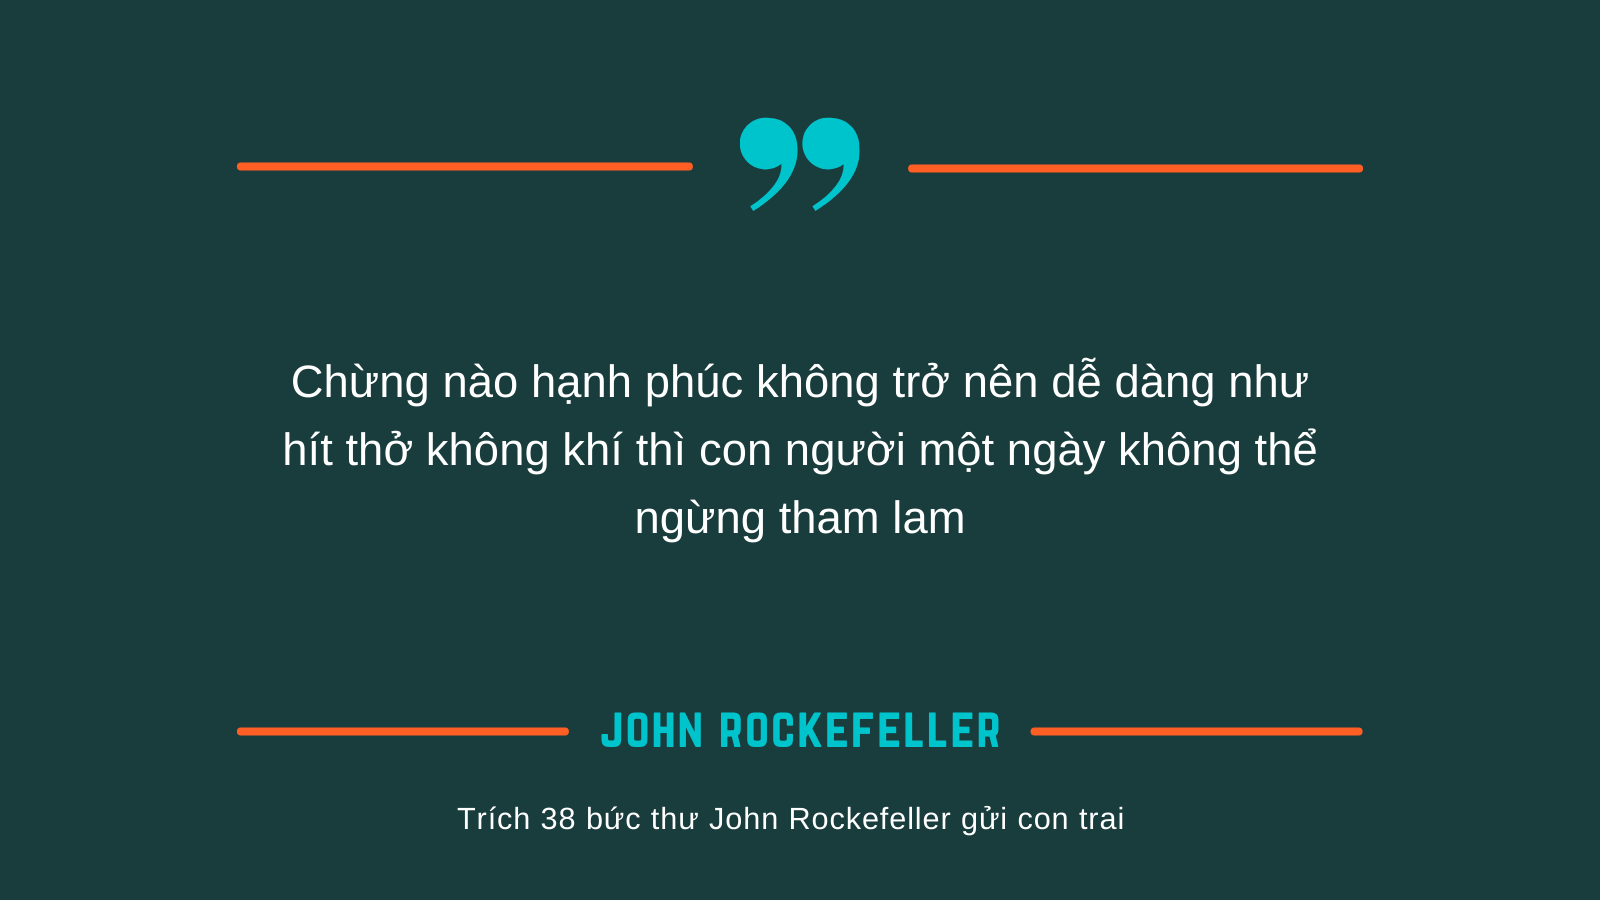 38 buc thu gui con trai cua John Rockefeller 17